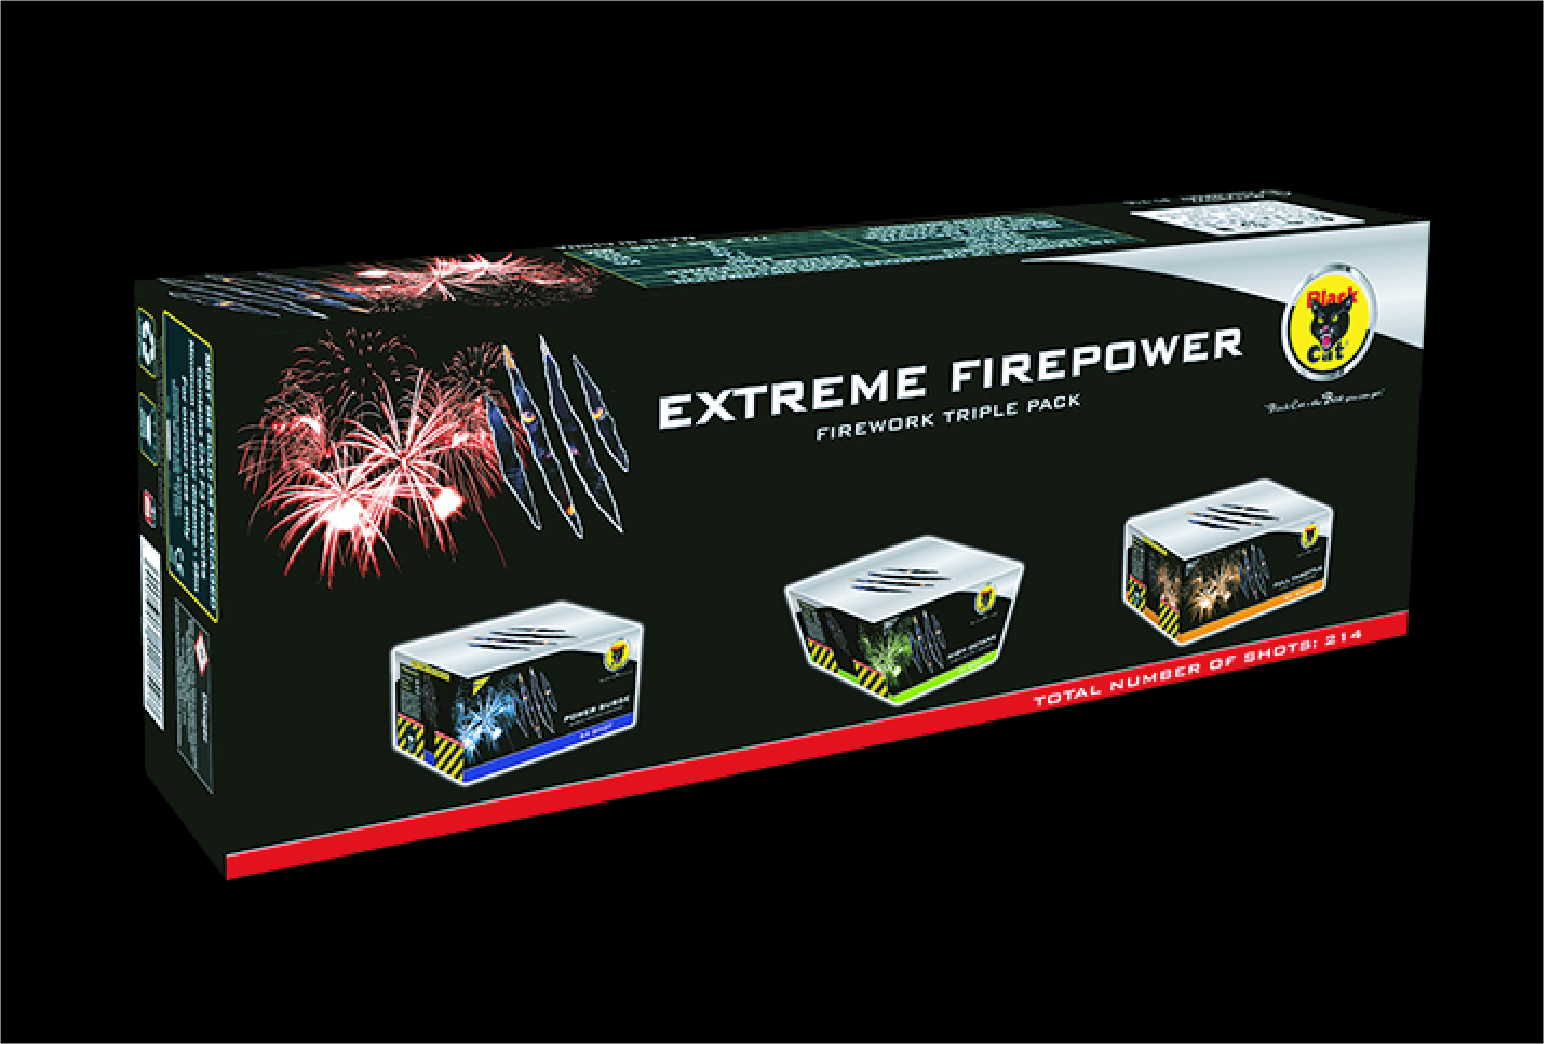 Extreme Firepower